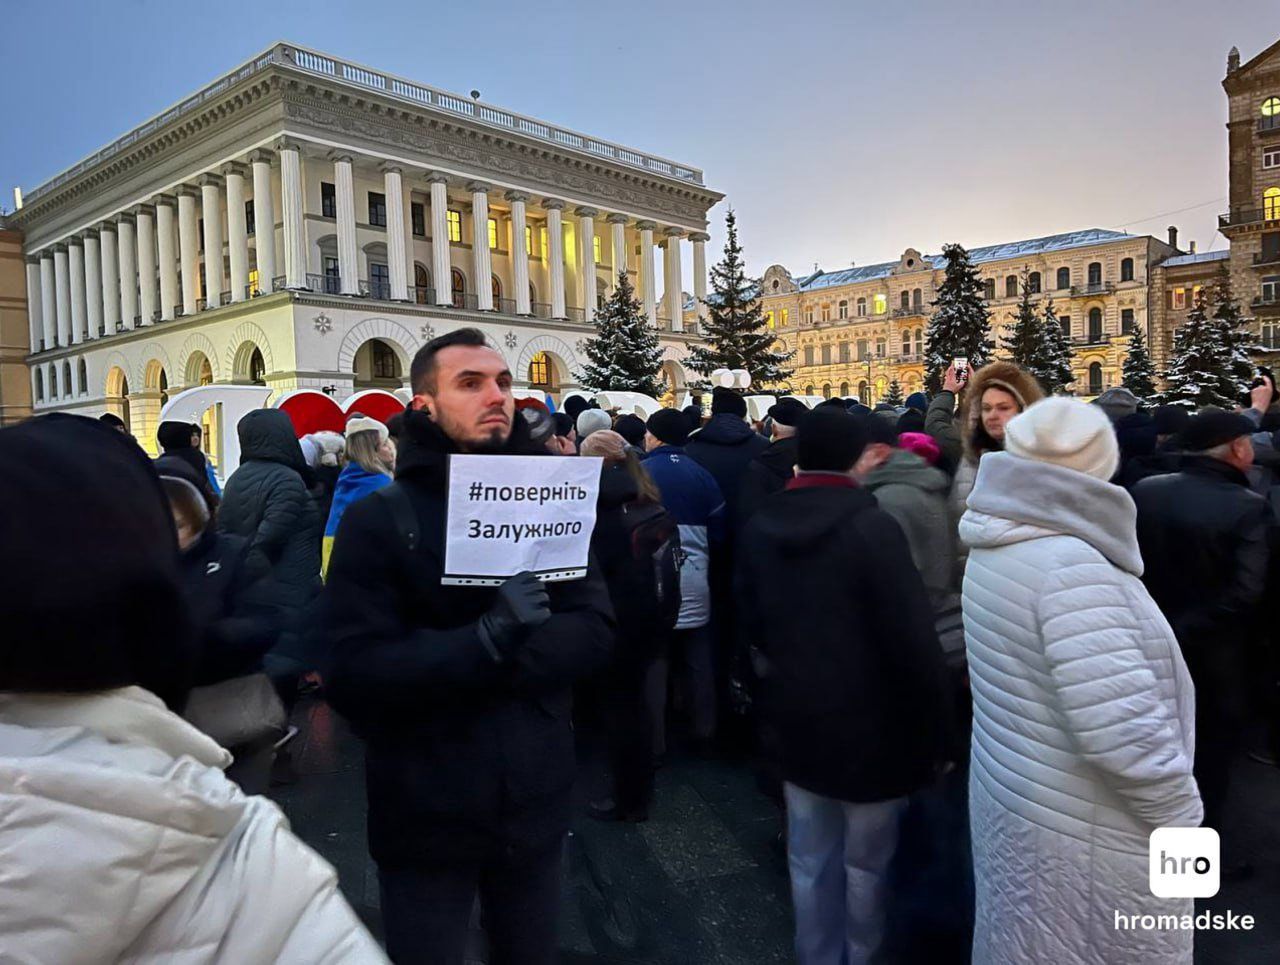 Protest in Kiev against the dismissal of Valeriy Zaluzhnyi. A man holds a sign that reads "bring back Zaluzhnyi".